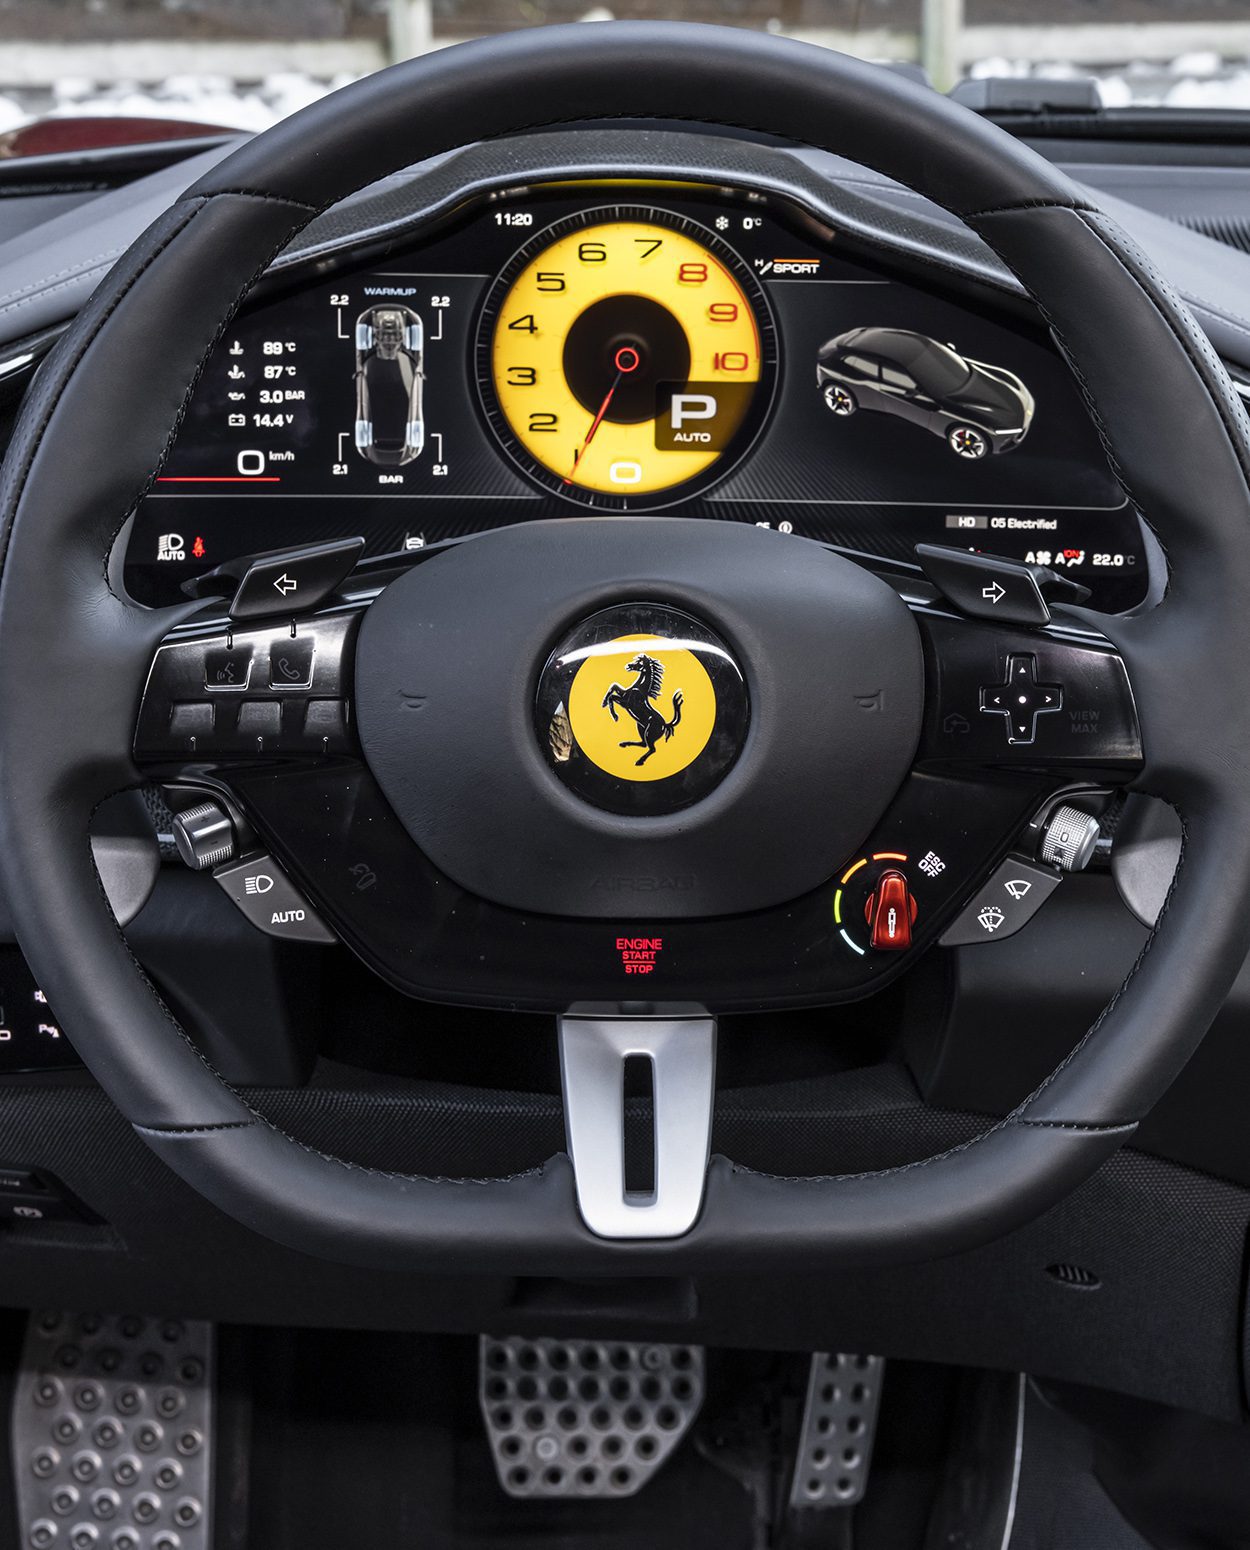 Ferrari Purosangue review: Our verdict of the supercar SUV